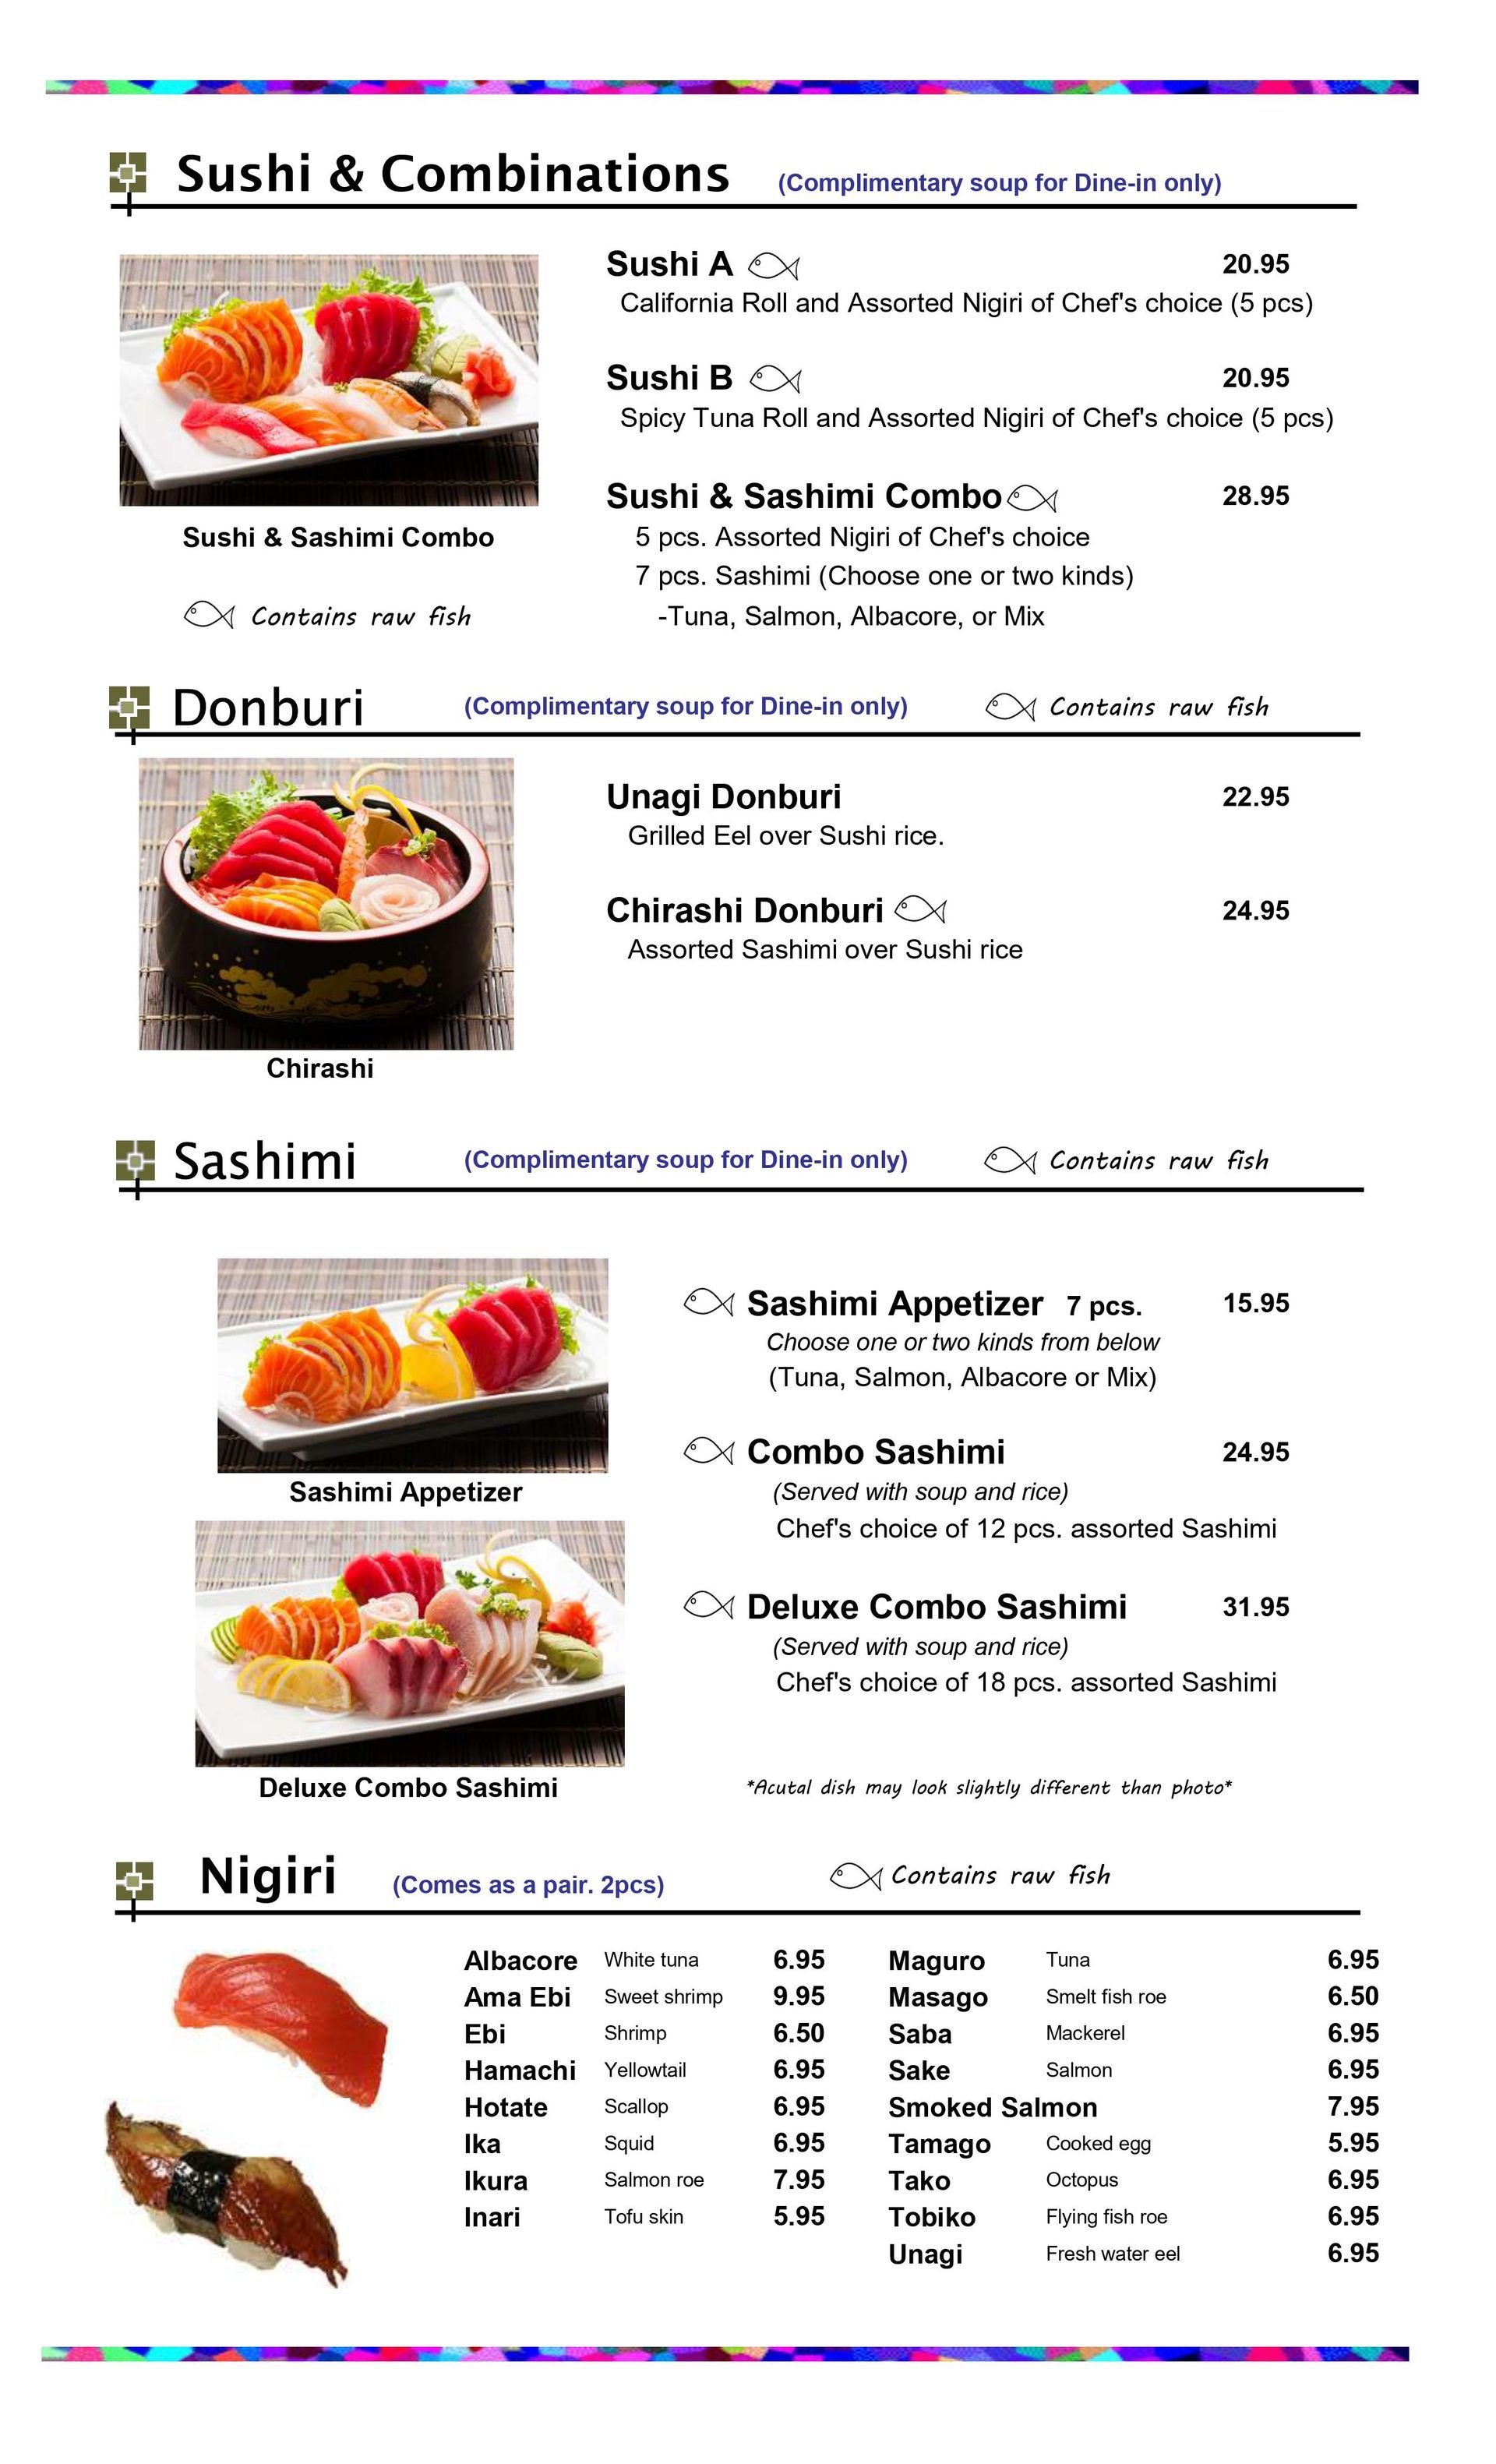 Sushi & Combinations